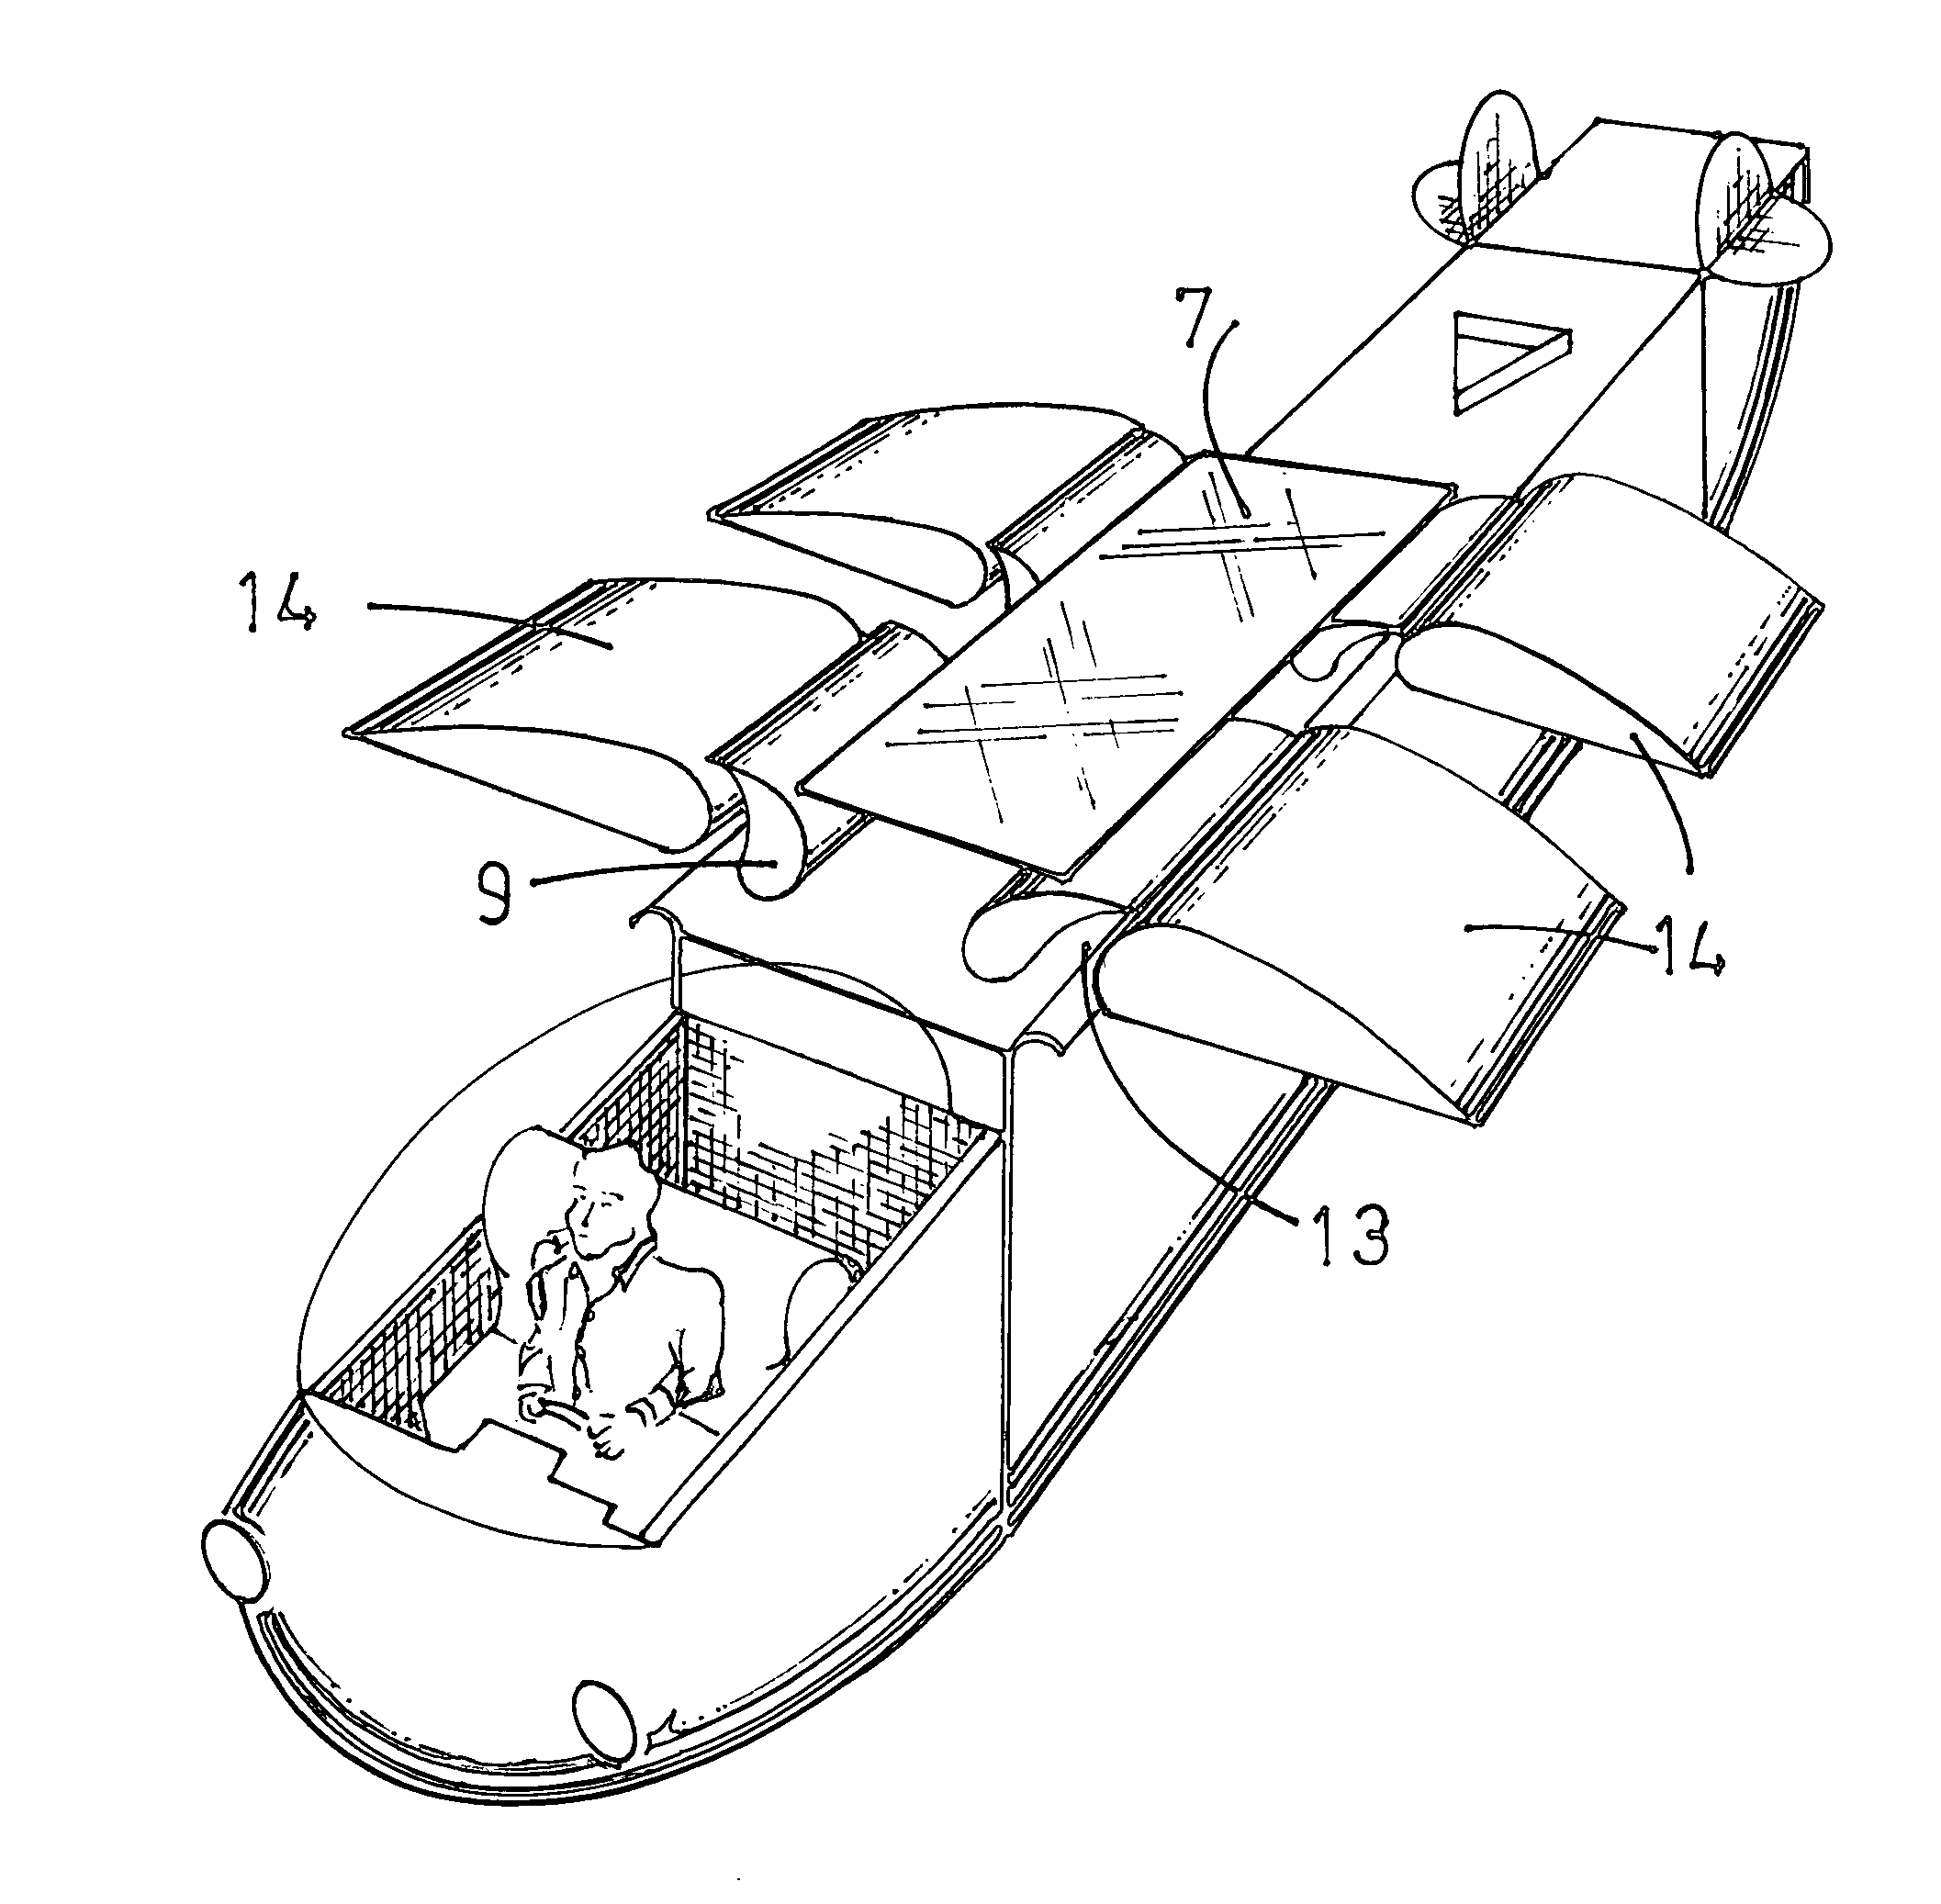 Vertical and horizontal flight aircraft "sky rover"